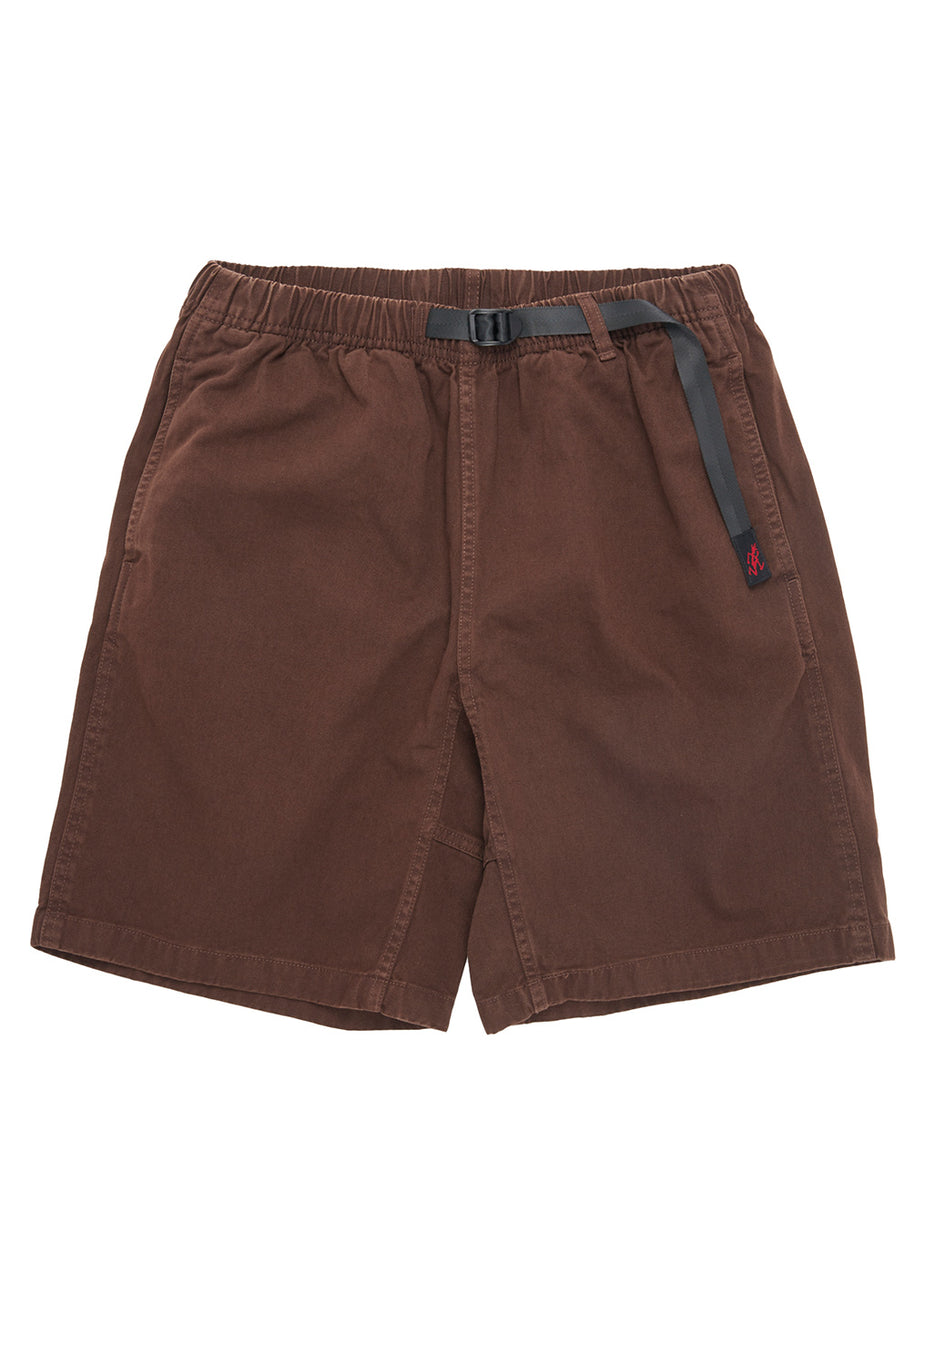 Gramicci Men's G Shorts - Dark Brown